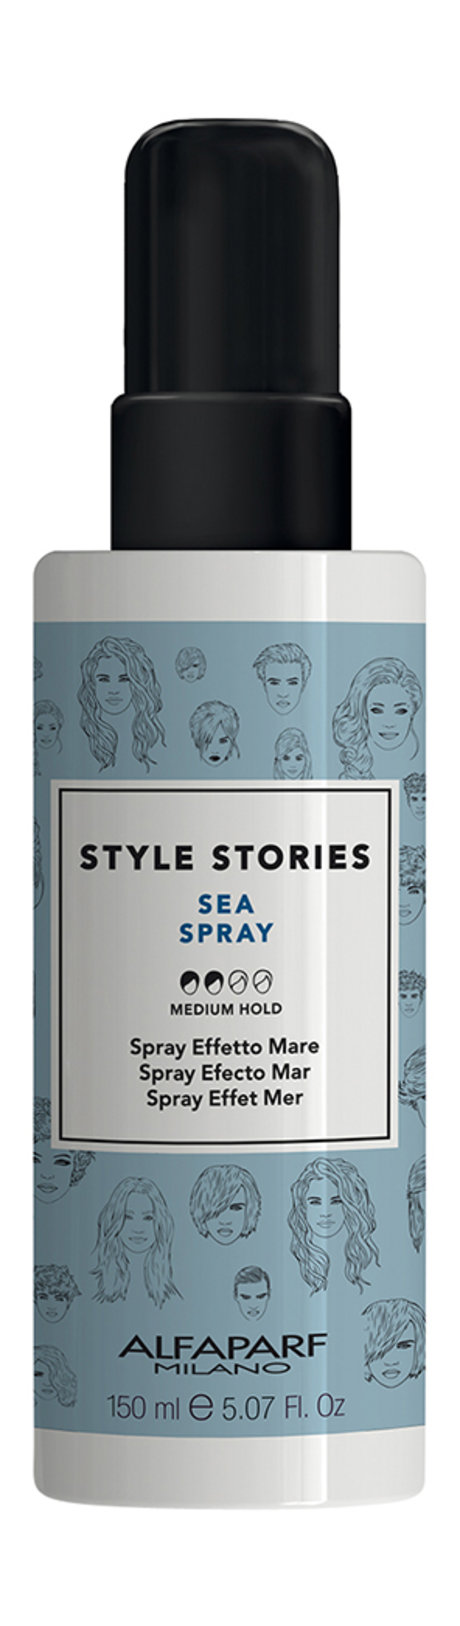 alfaparf milano style stories sea spray